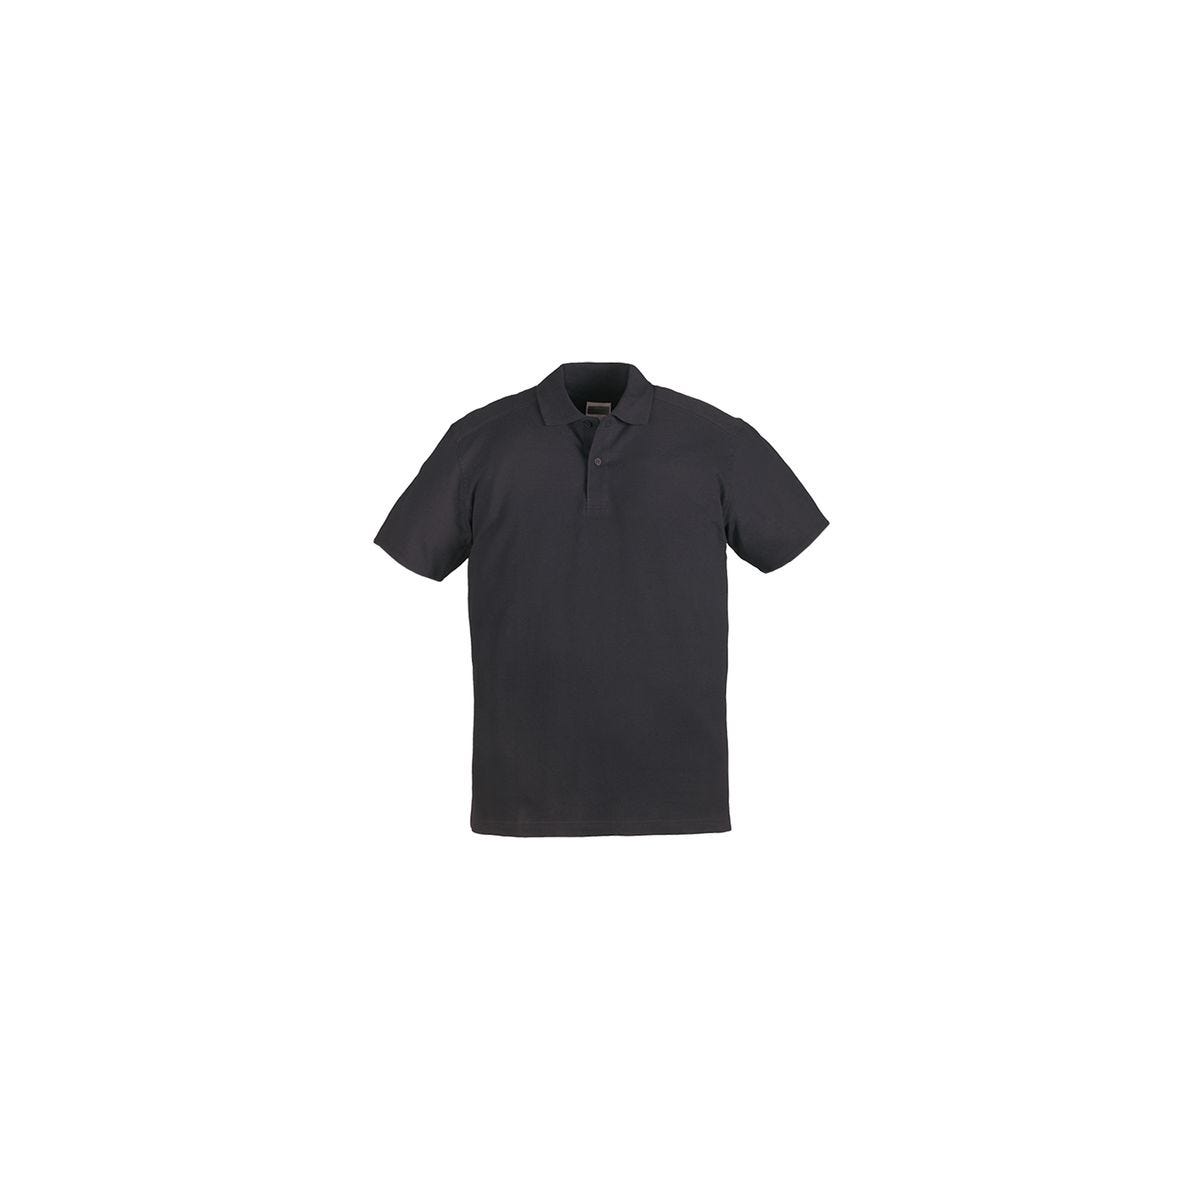 SAFARI Polo MC noir, 100% coton, 220g/m² - COVERGUARD - Taille S 0